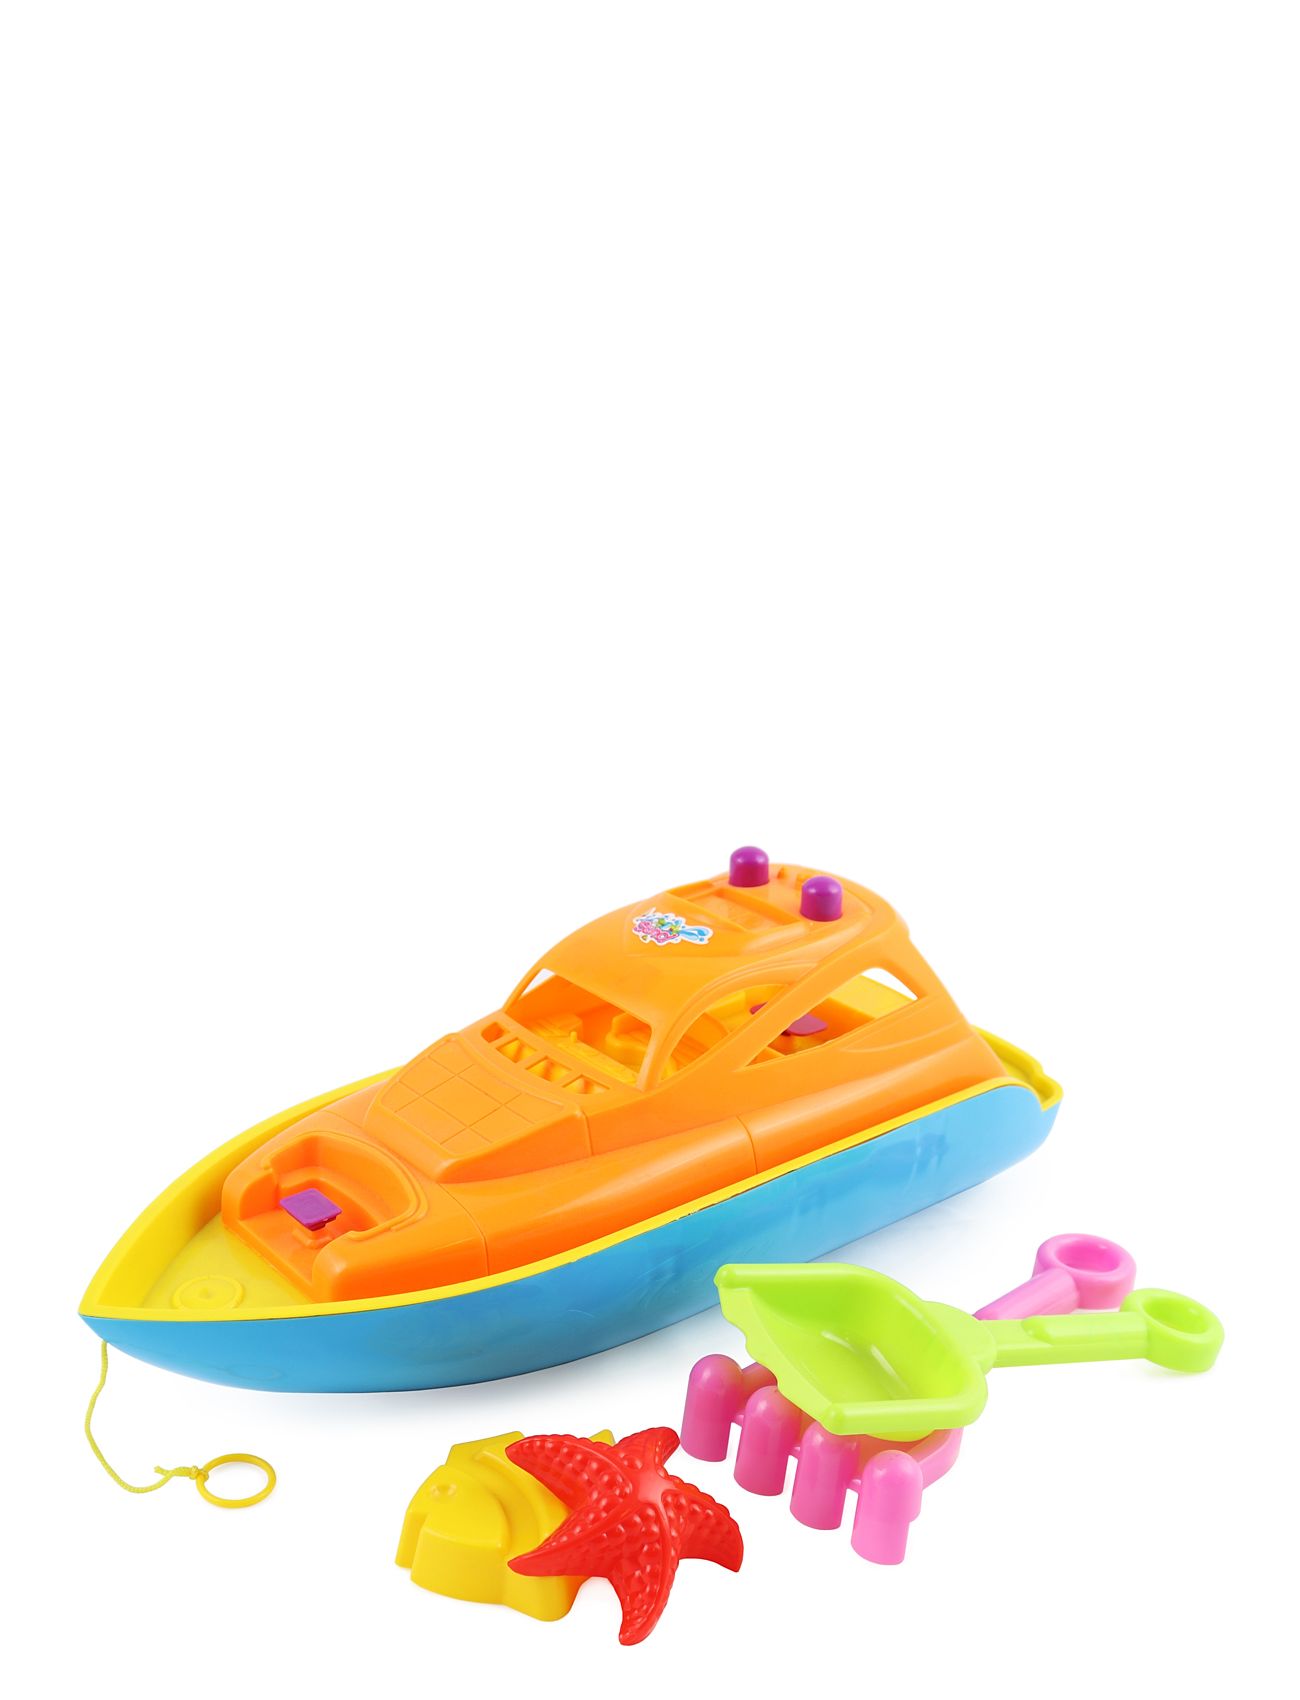 Båt Sandset 48 5 Delar Toys Outdoor Toys Sand Toys Multi/patterned Suntoy